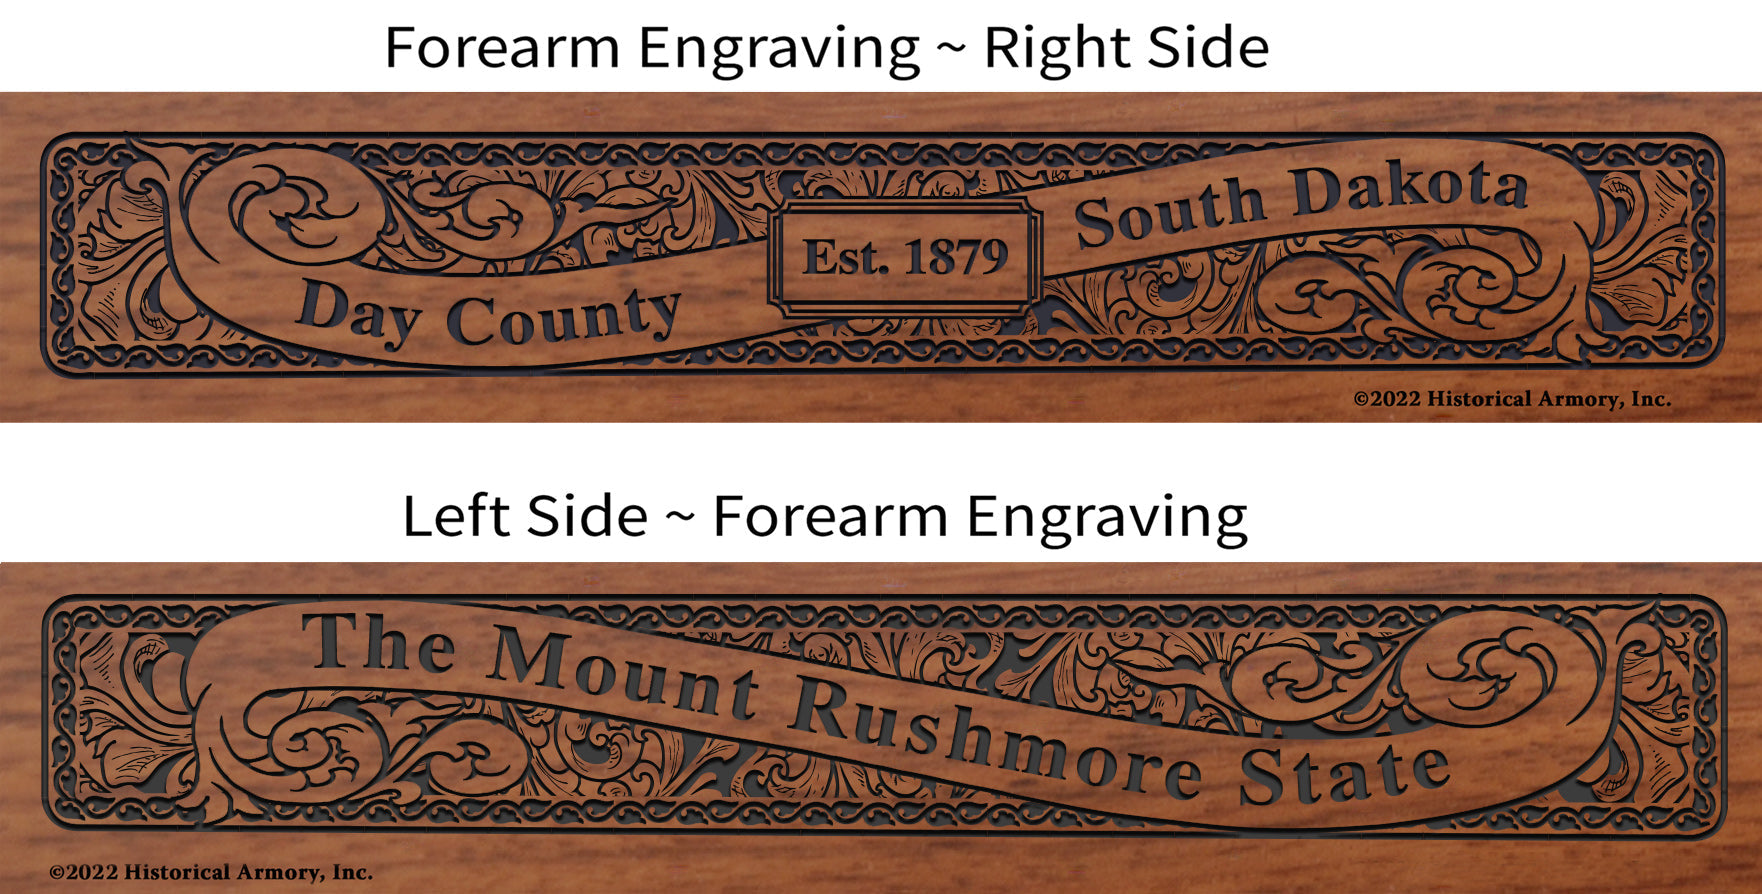 Day County South Dakota Engraved Rifle Forearm